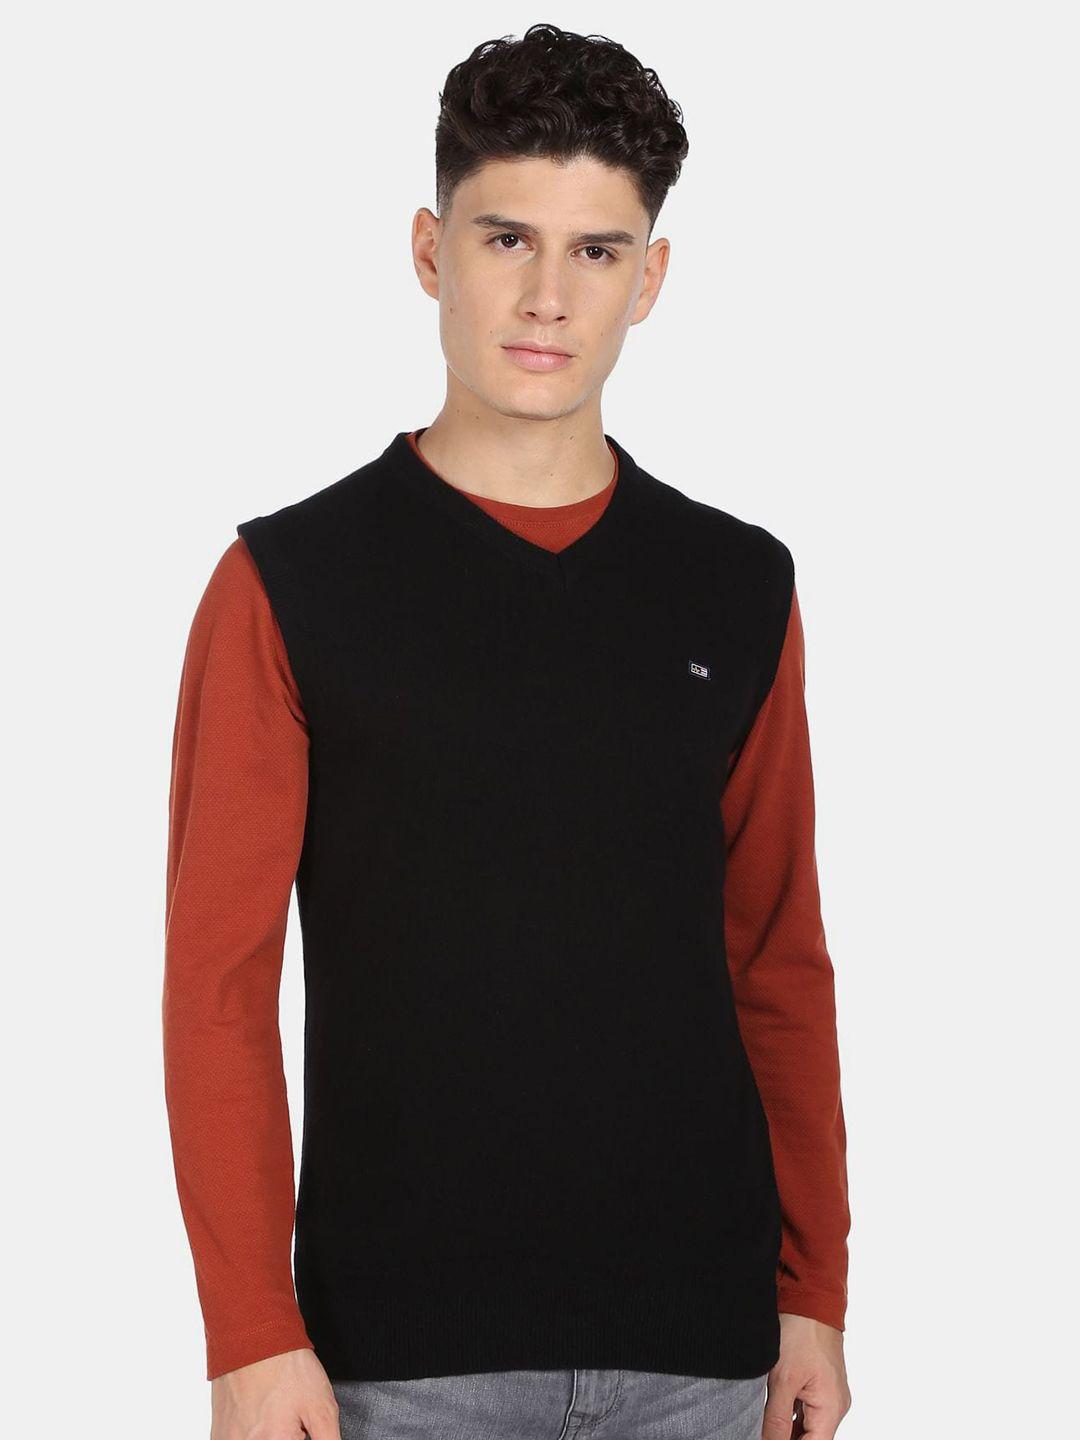 arrow sport v-neck sleeveless sweater vest sweaters